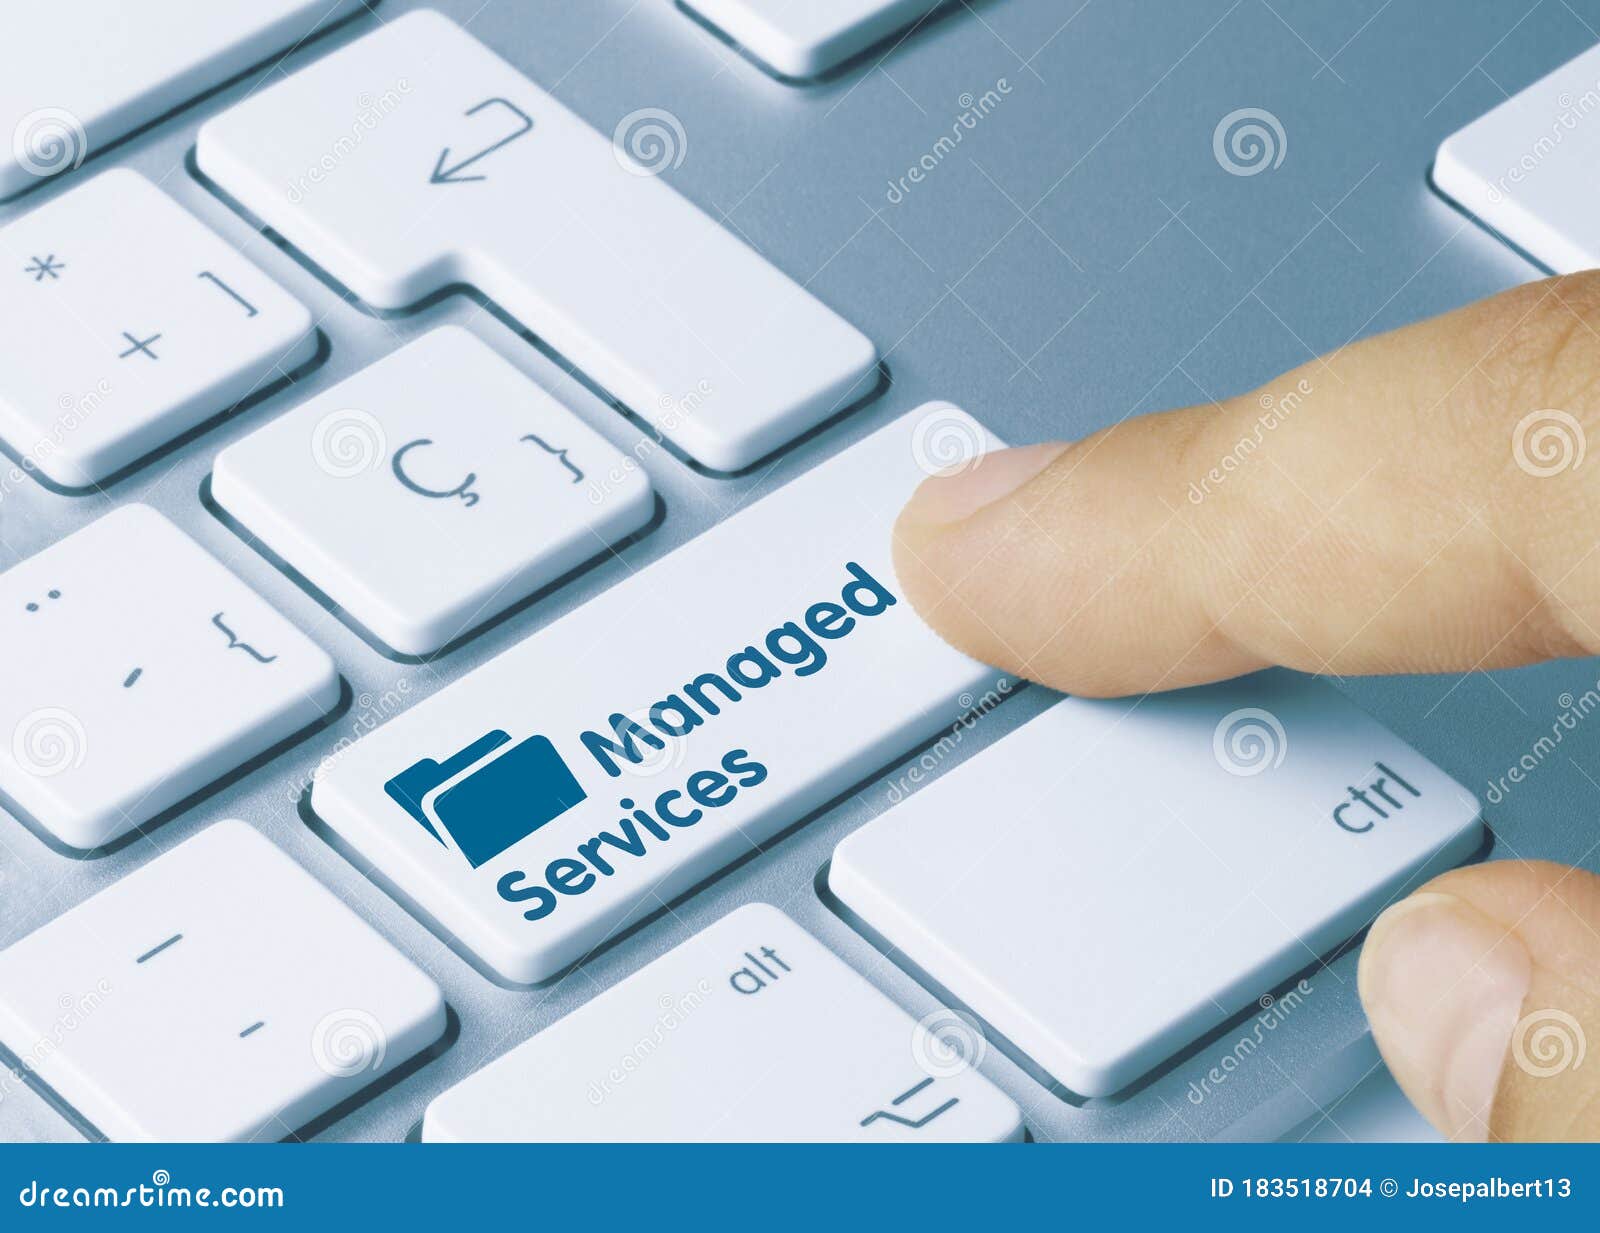 managed services - inscription on blue keyboard key